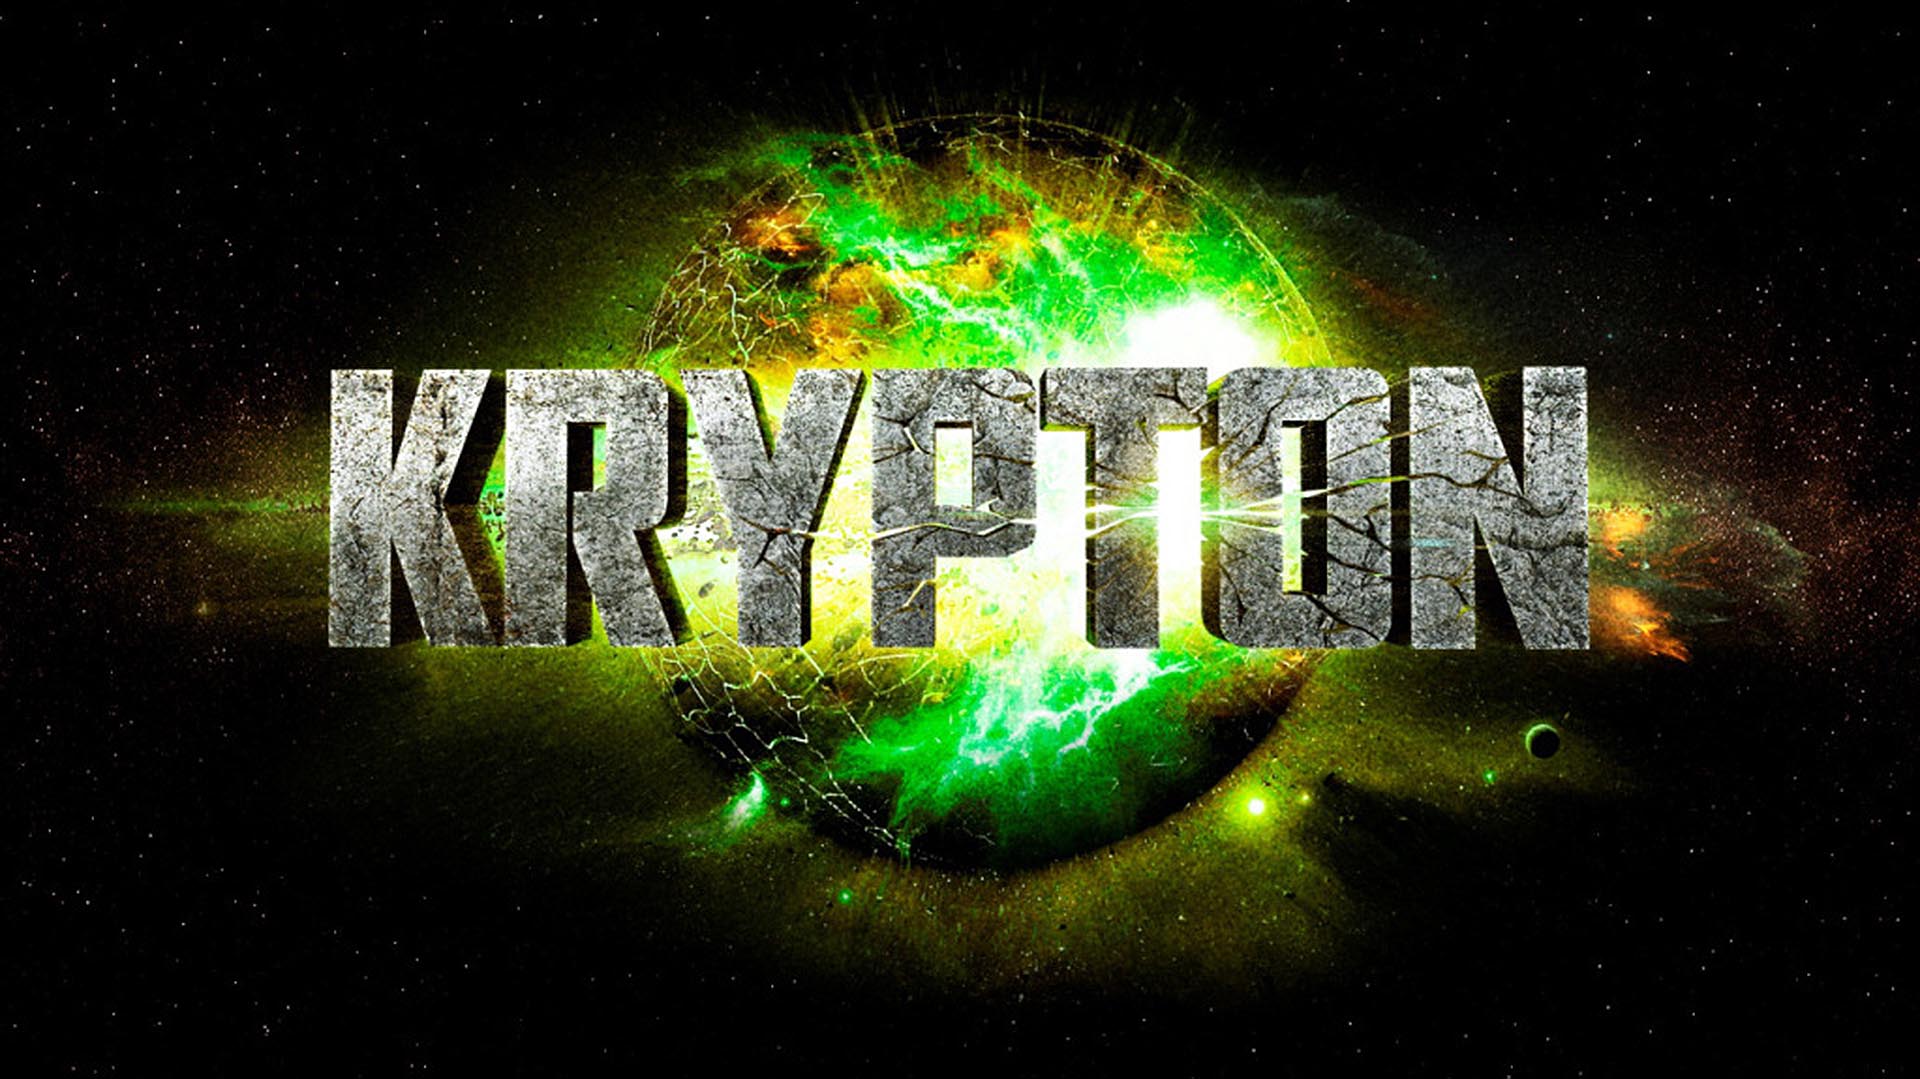 Krypton_blog_logo_01.jpg